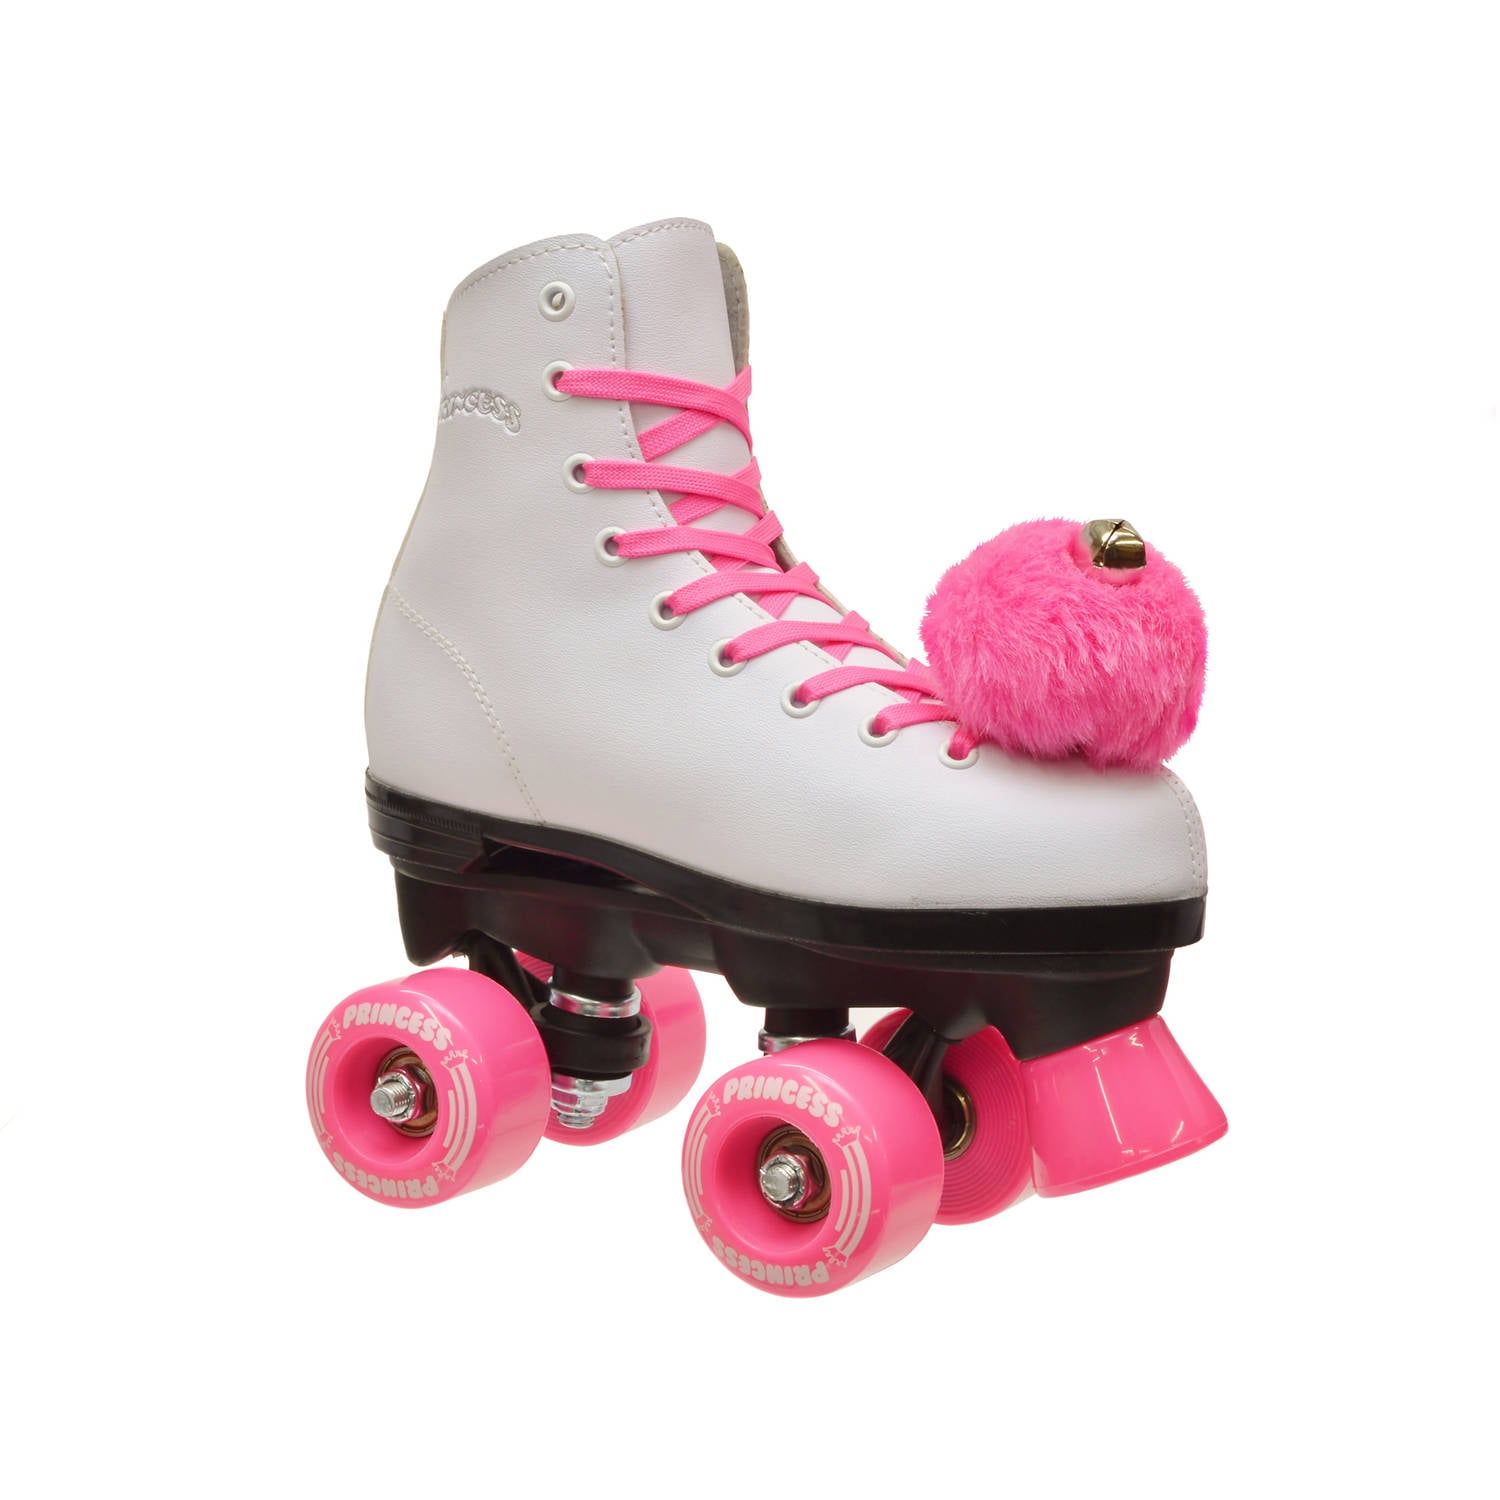 Girls Rollerskates XMAS GIFT SFR Storm White/Pink Adjustable Quad Skates 